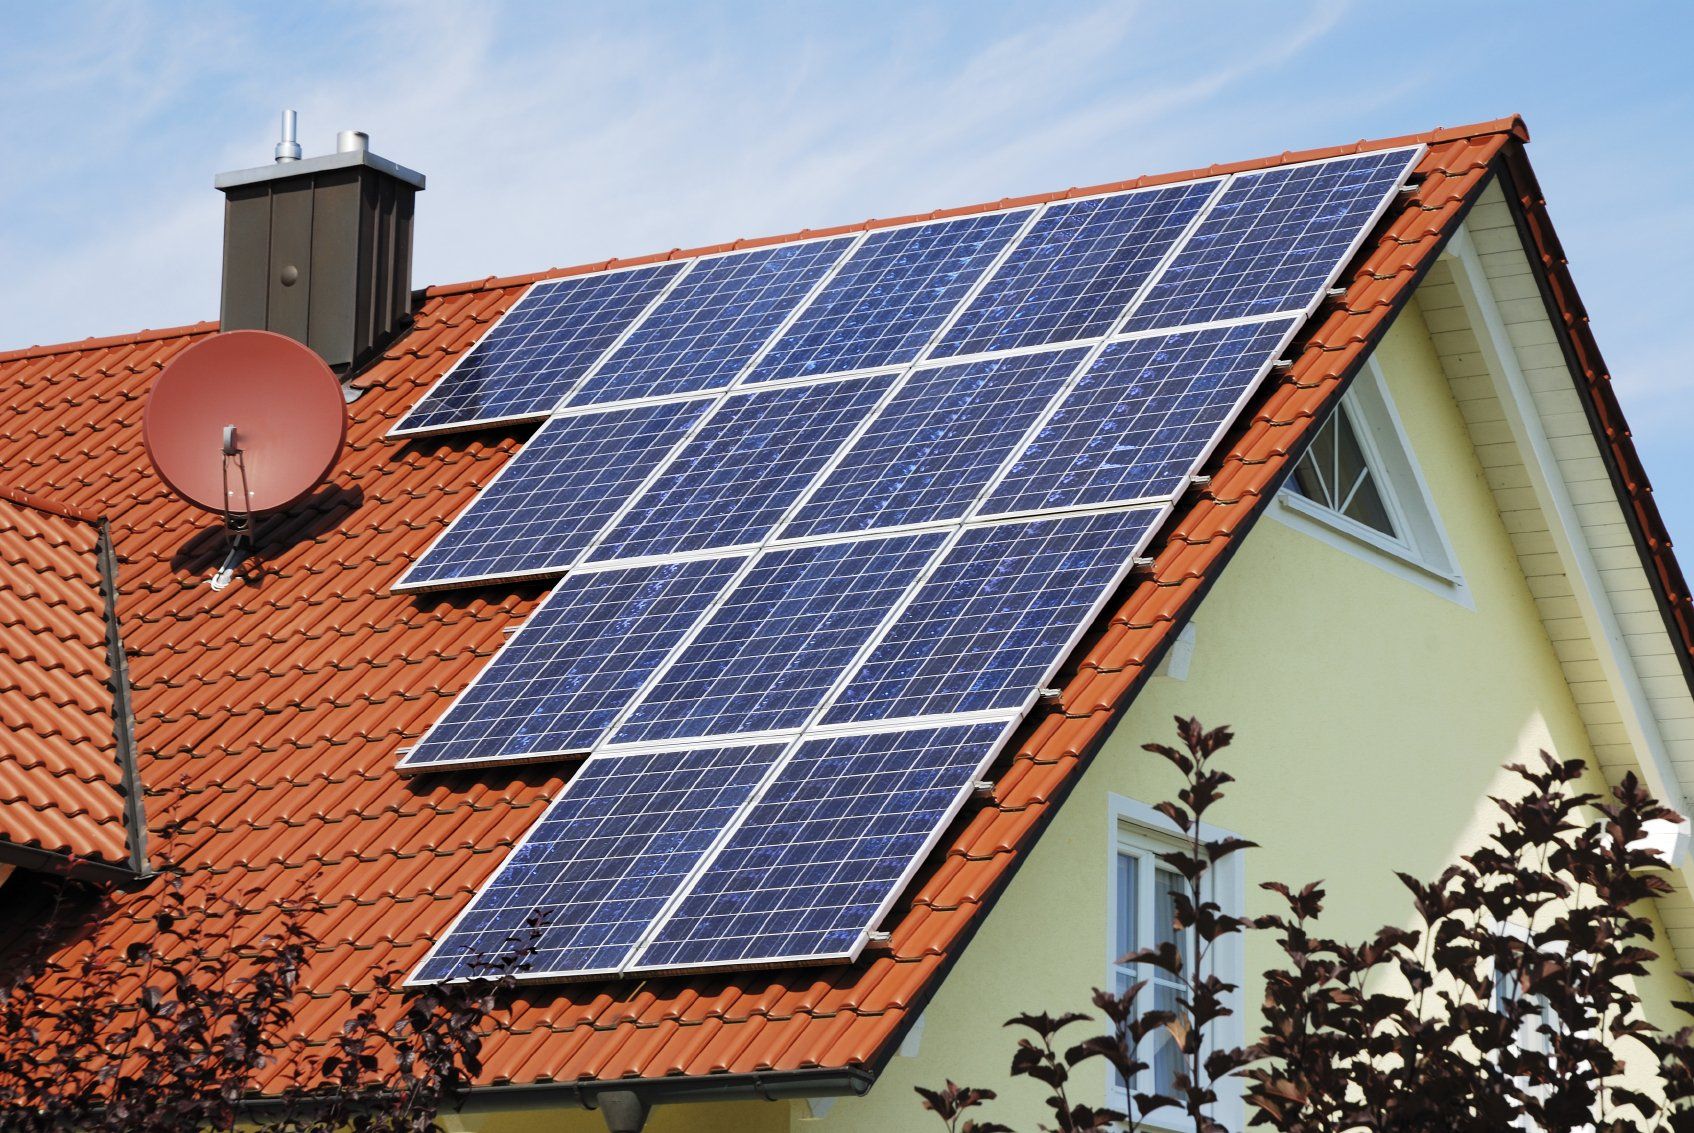 arnaque photovoltaïque annulation du contrat d'installation